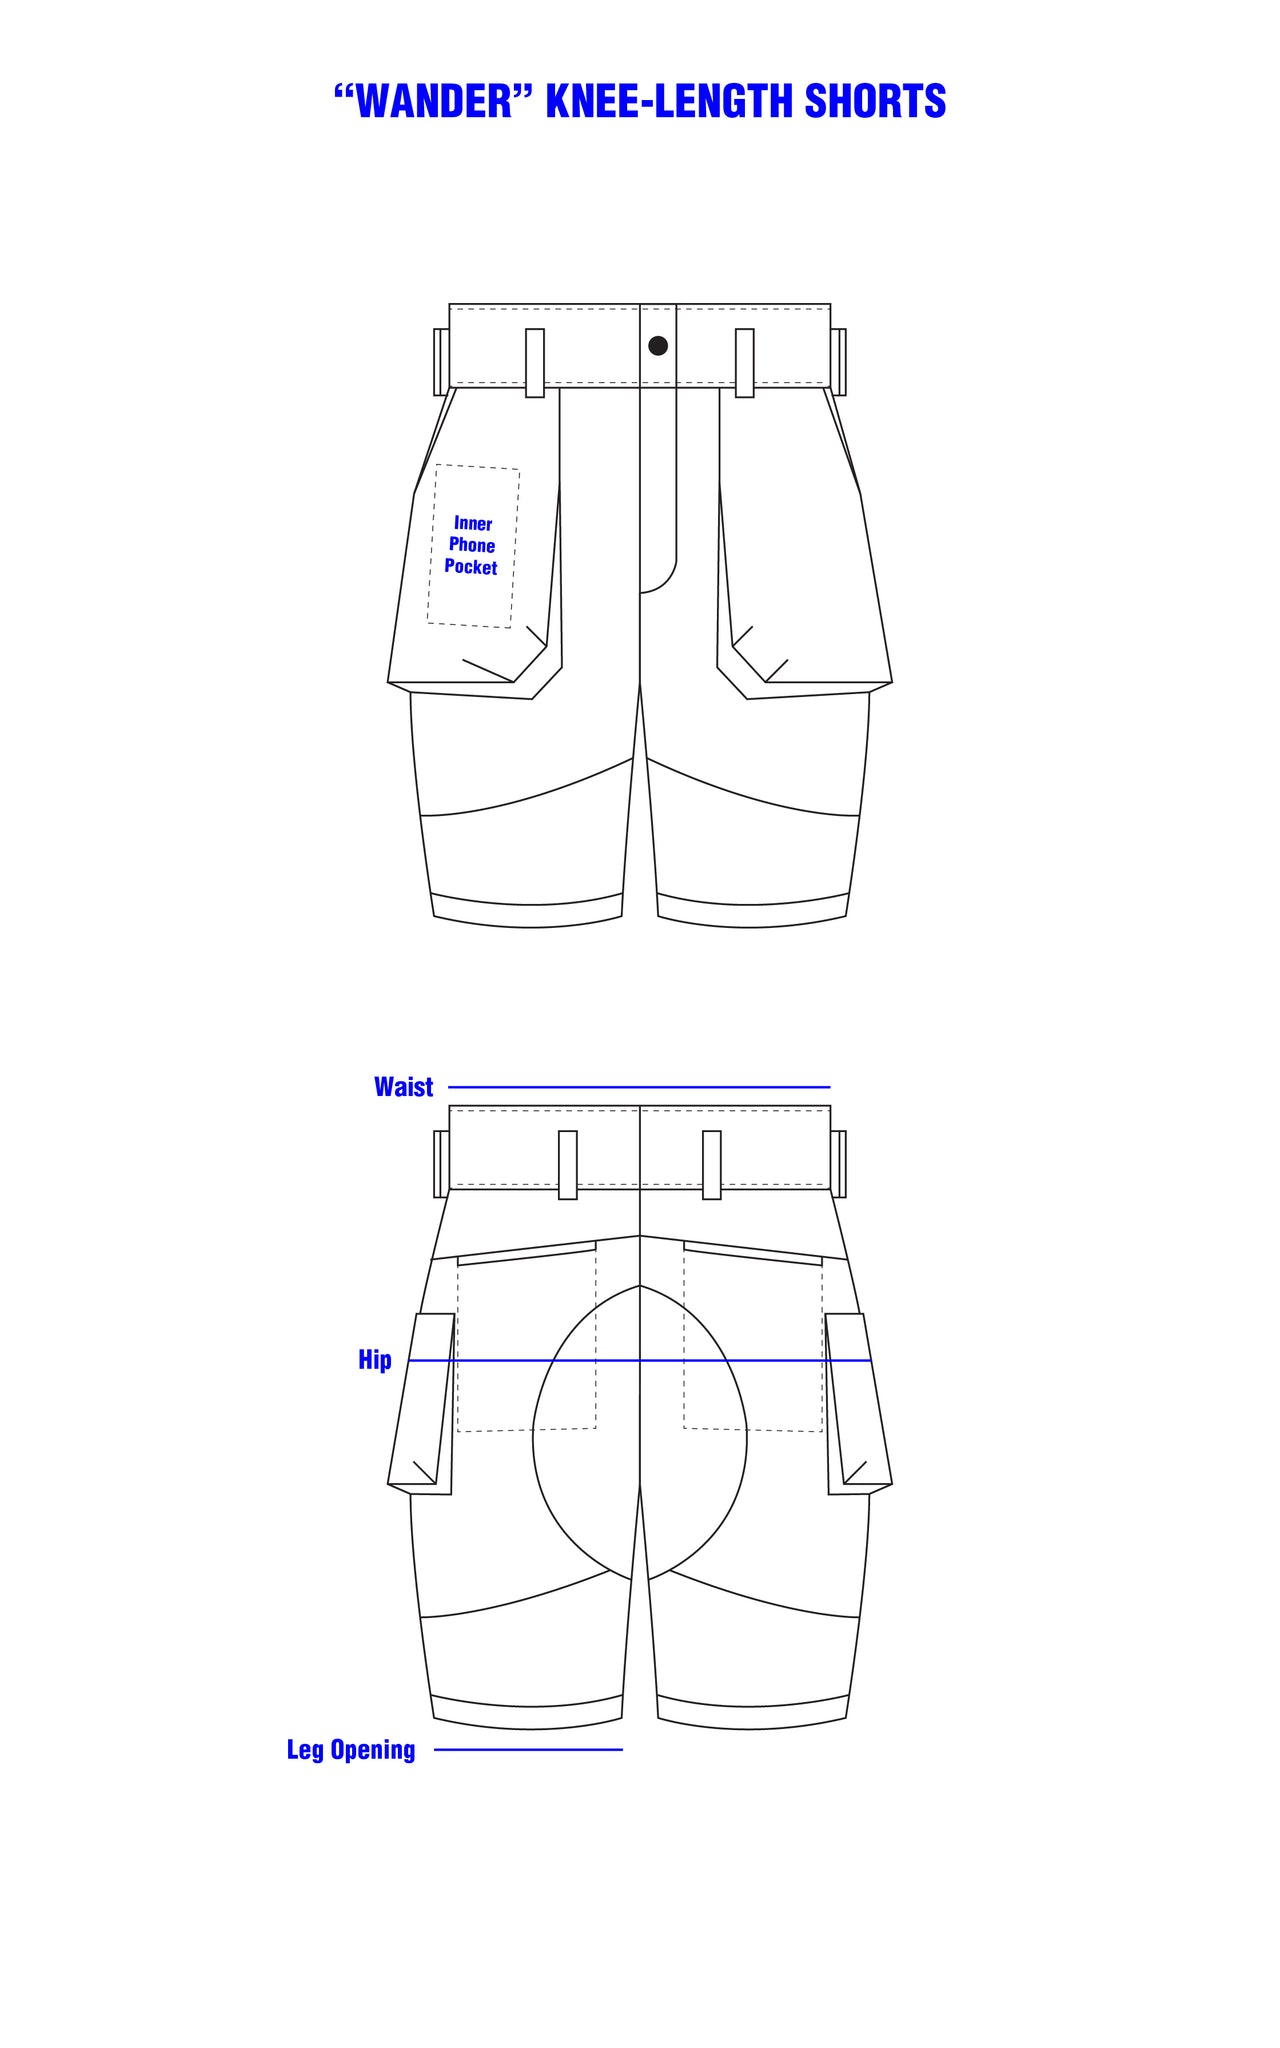 2. “Wander” Knee-Length Shorts